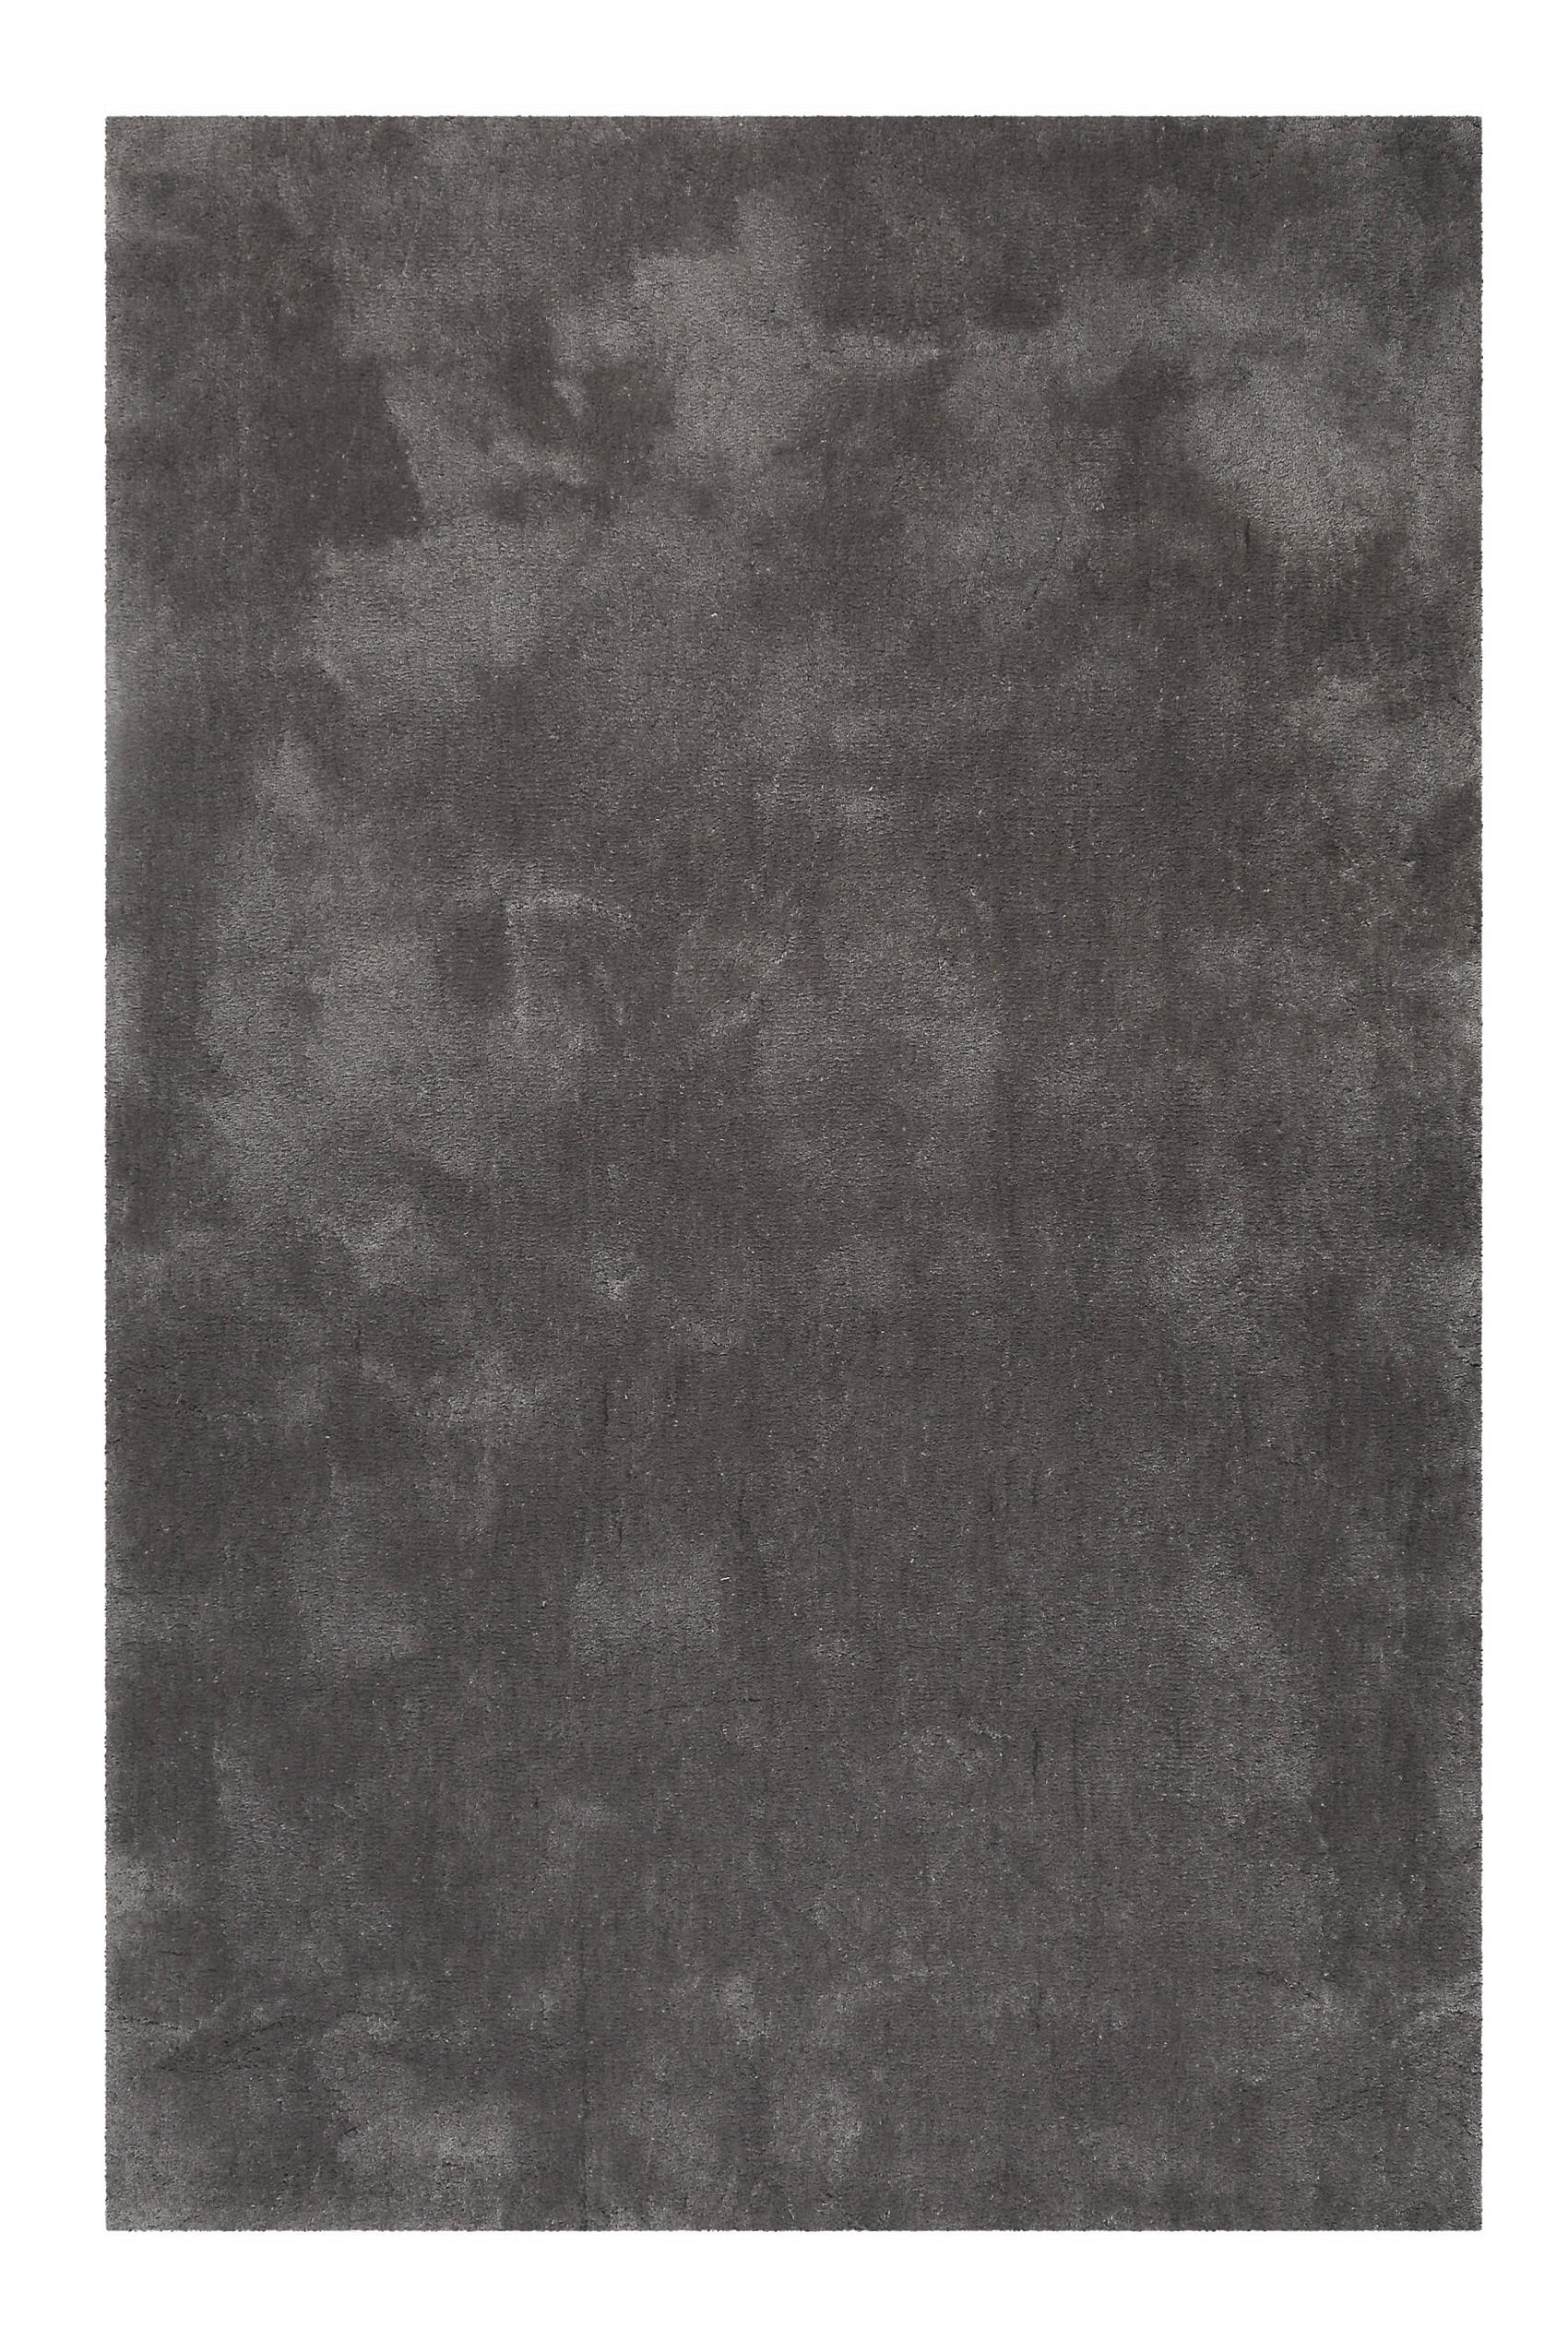 HOCHFLORTEPPICH 70/140 cm Emilia  - Grau, Design, Textil (70/140cm) - Novel